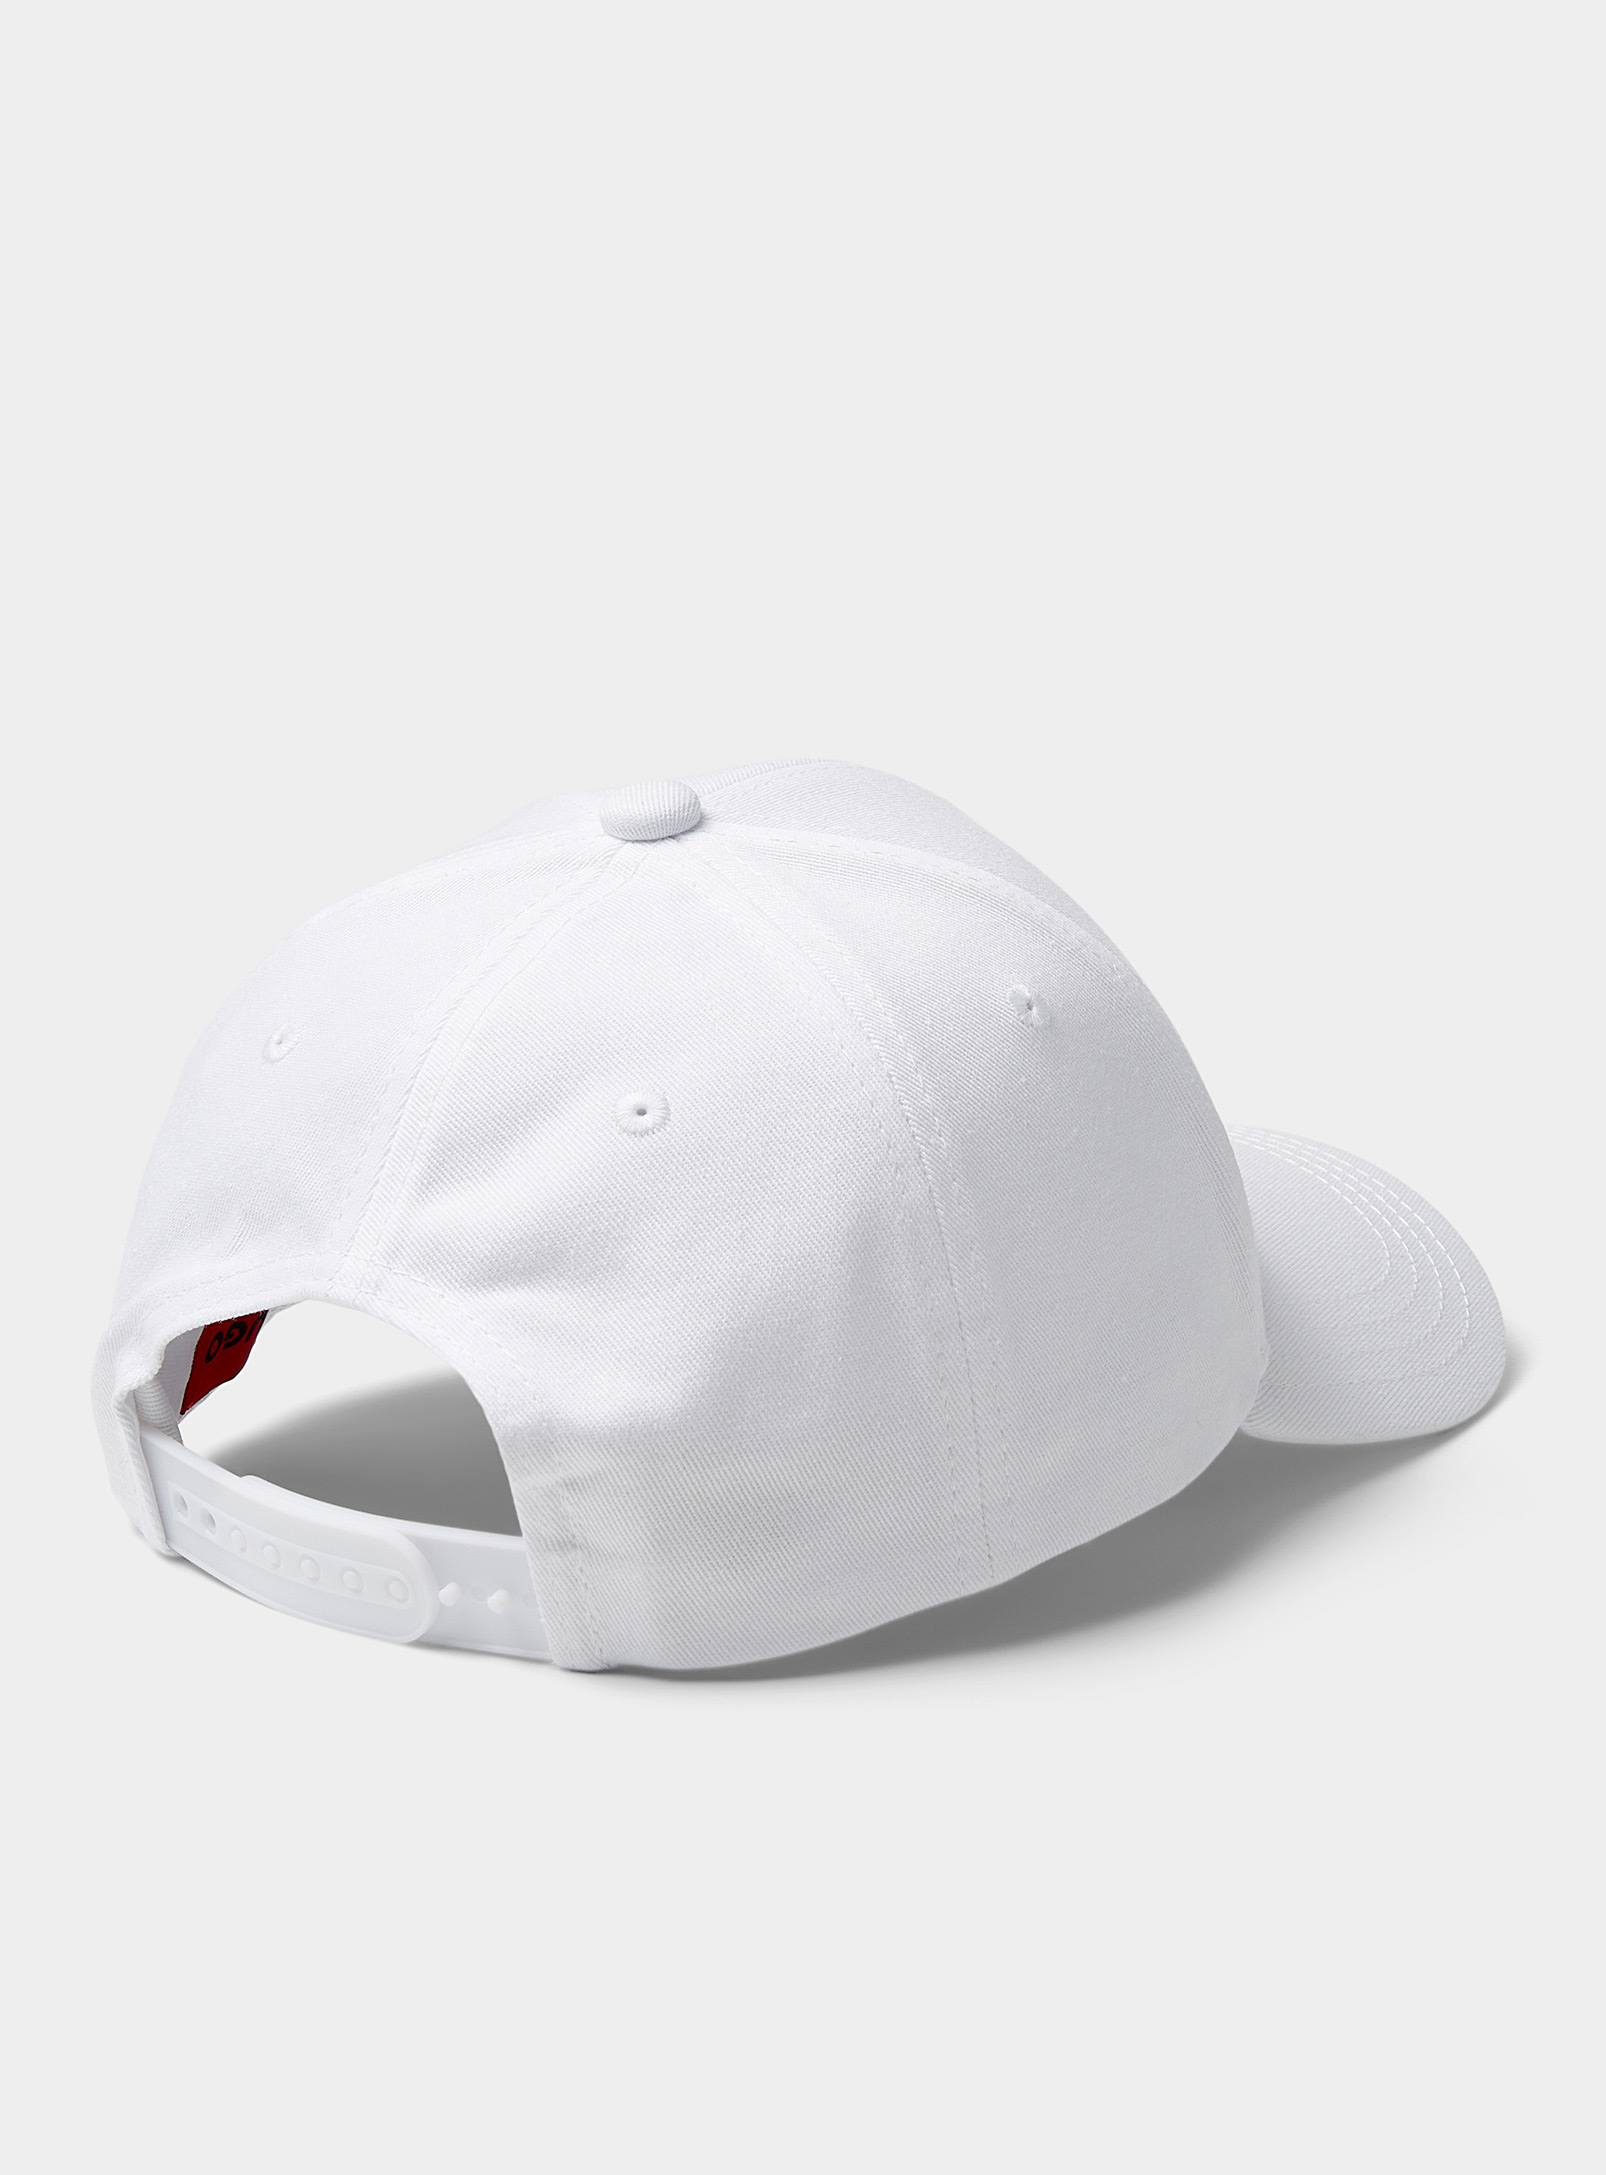 HUGO - La casquette blanche logo rouge